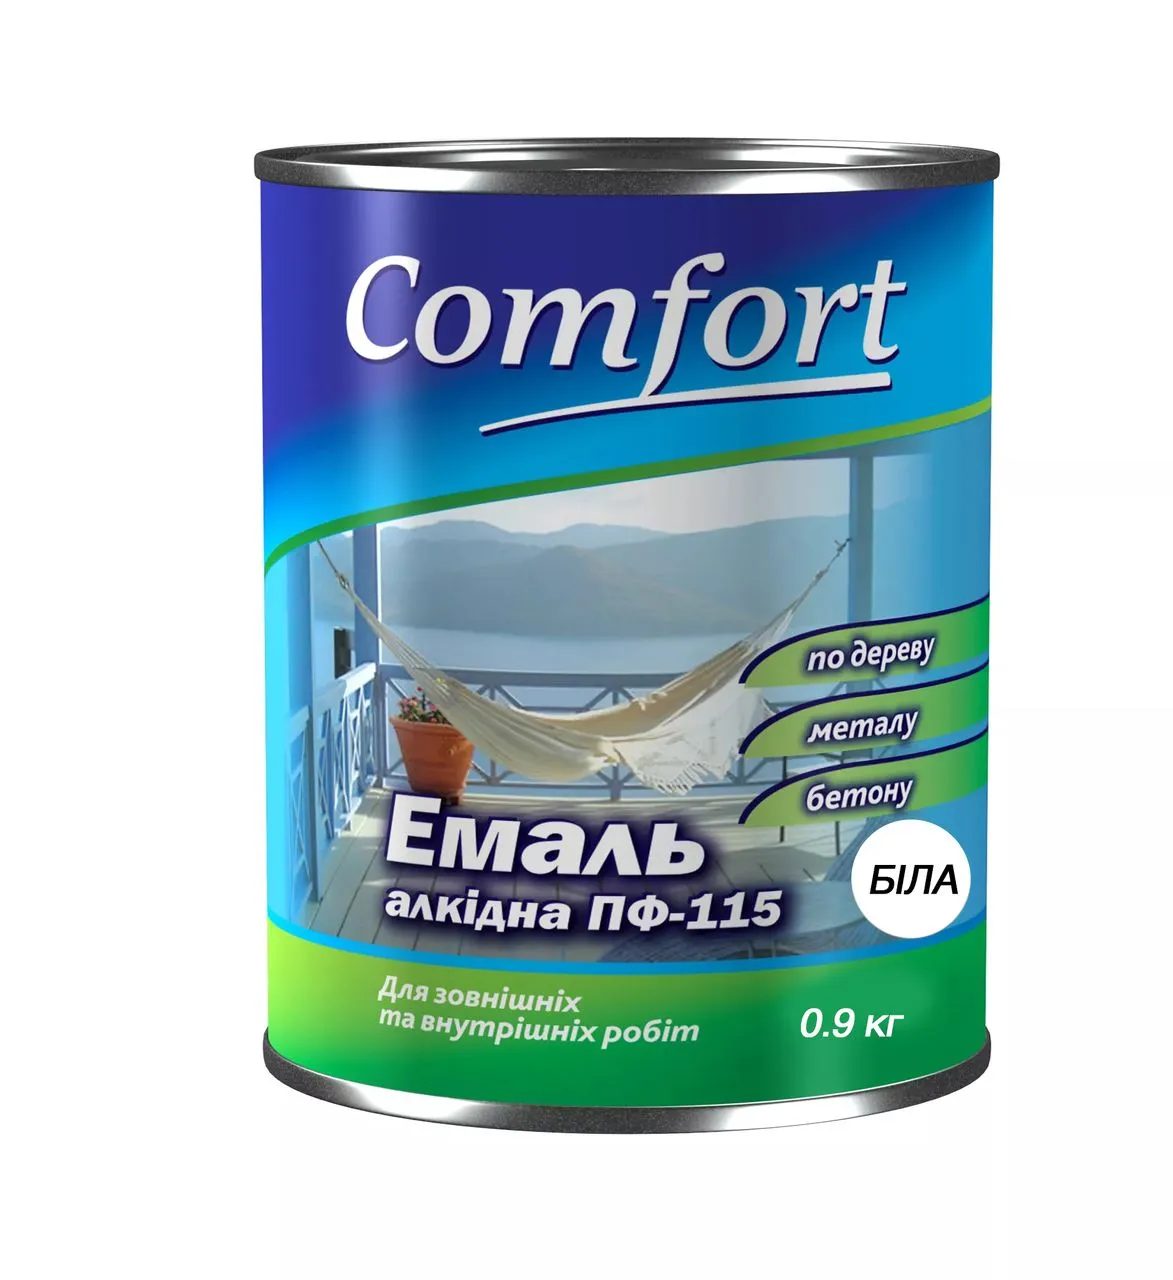 Comfort Эмаль 0,9 кг#1